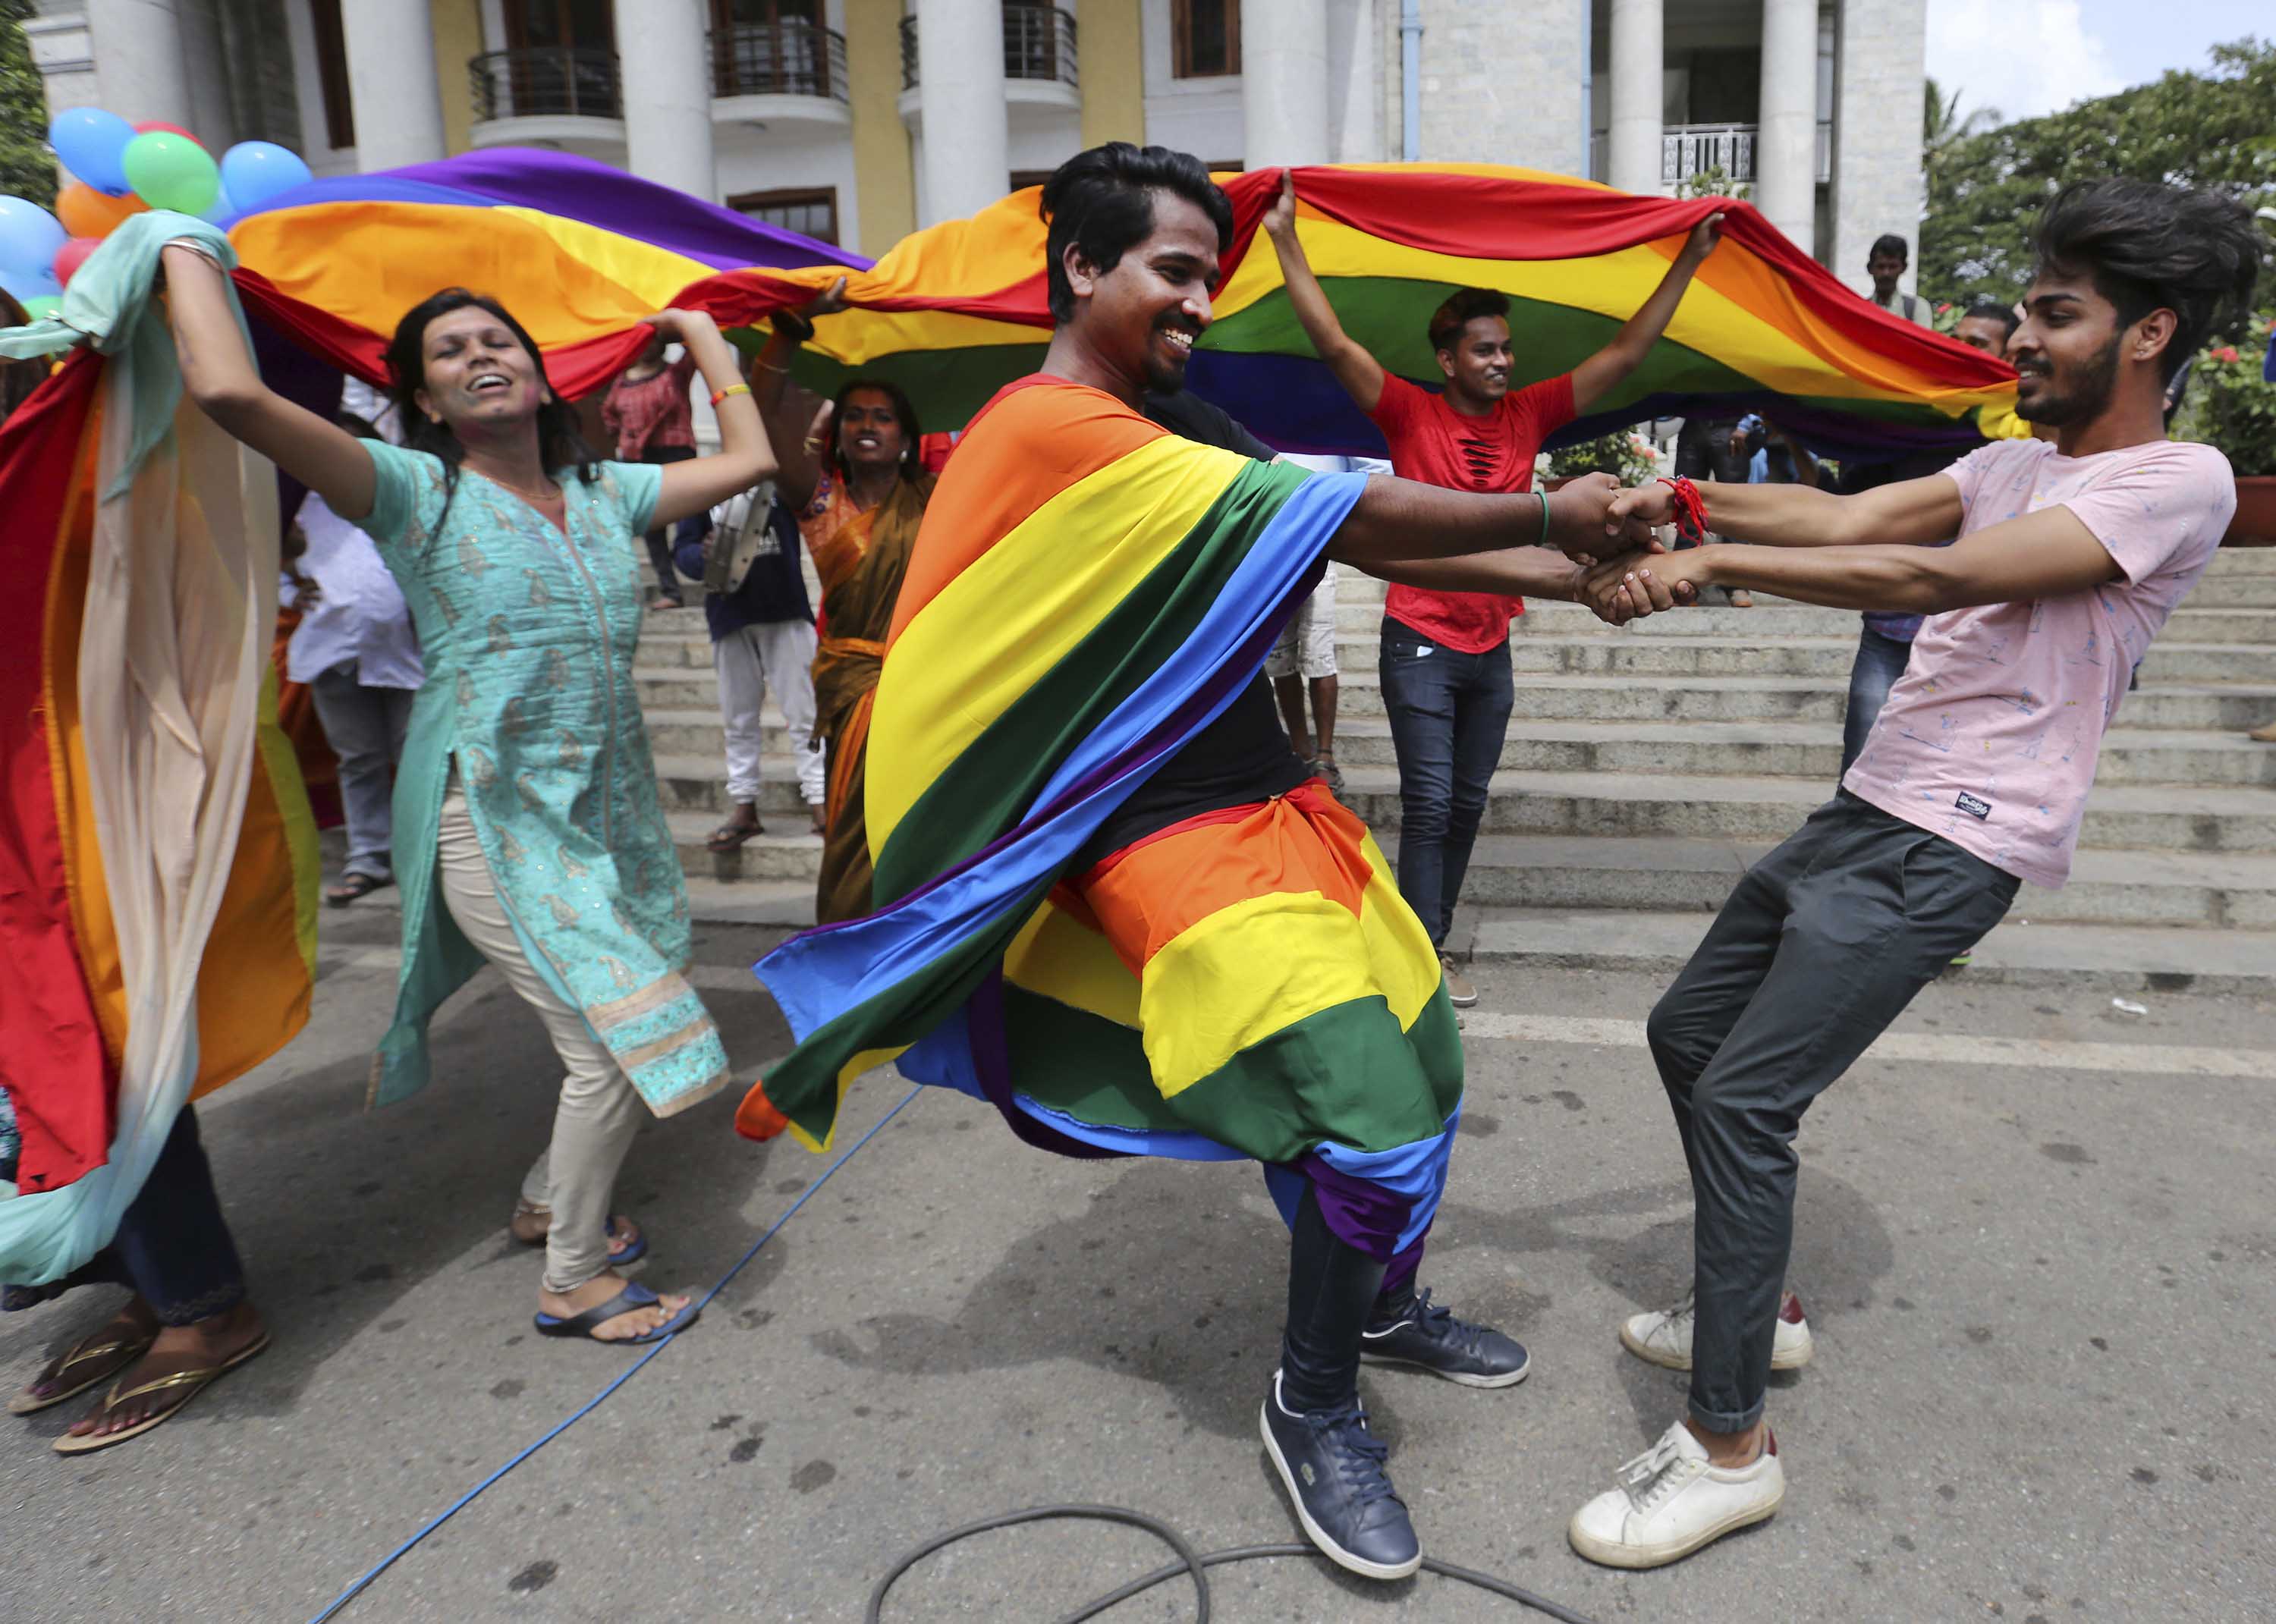 Raj Weep Com Xxx Sex Hindi Design Vido - India: gay sex decriminalized by top court in landmark ruling | CNN